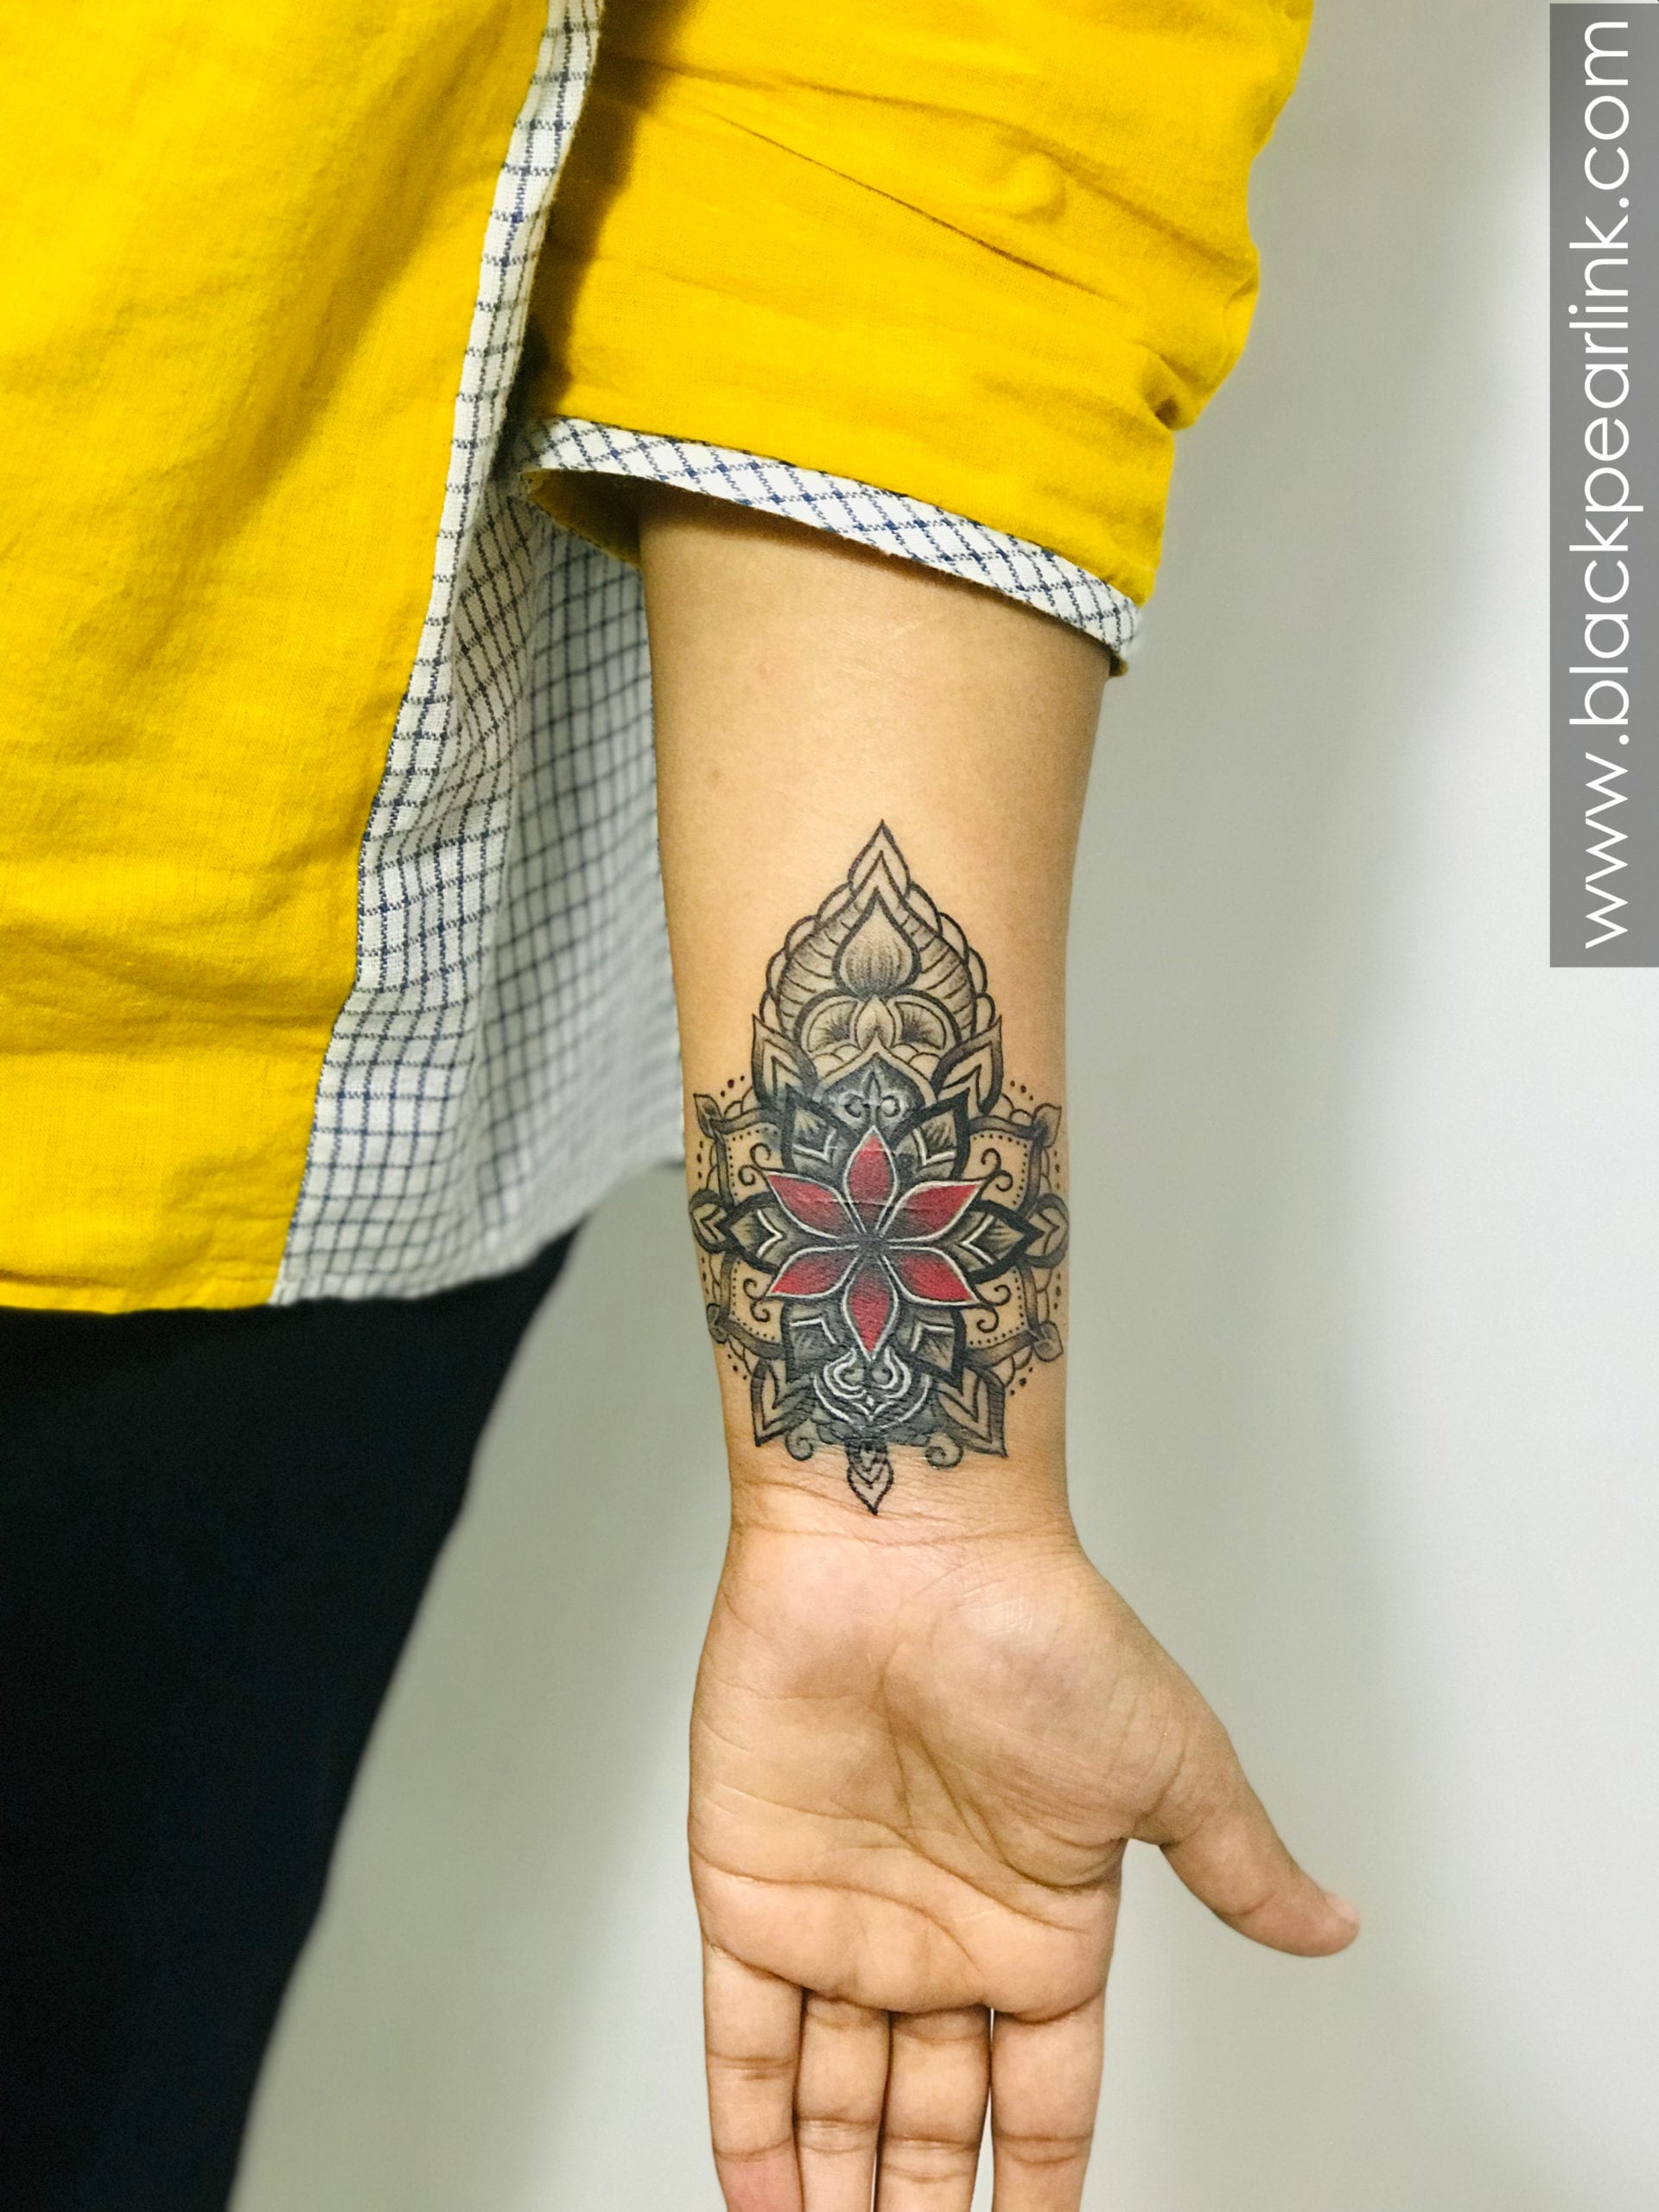 Coverup Tattoo with Mandala on Wrist